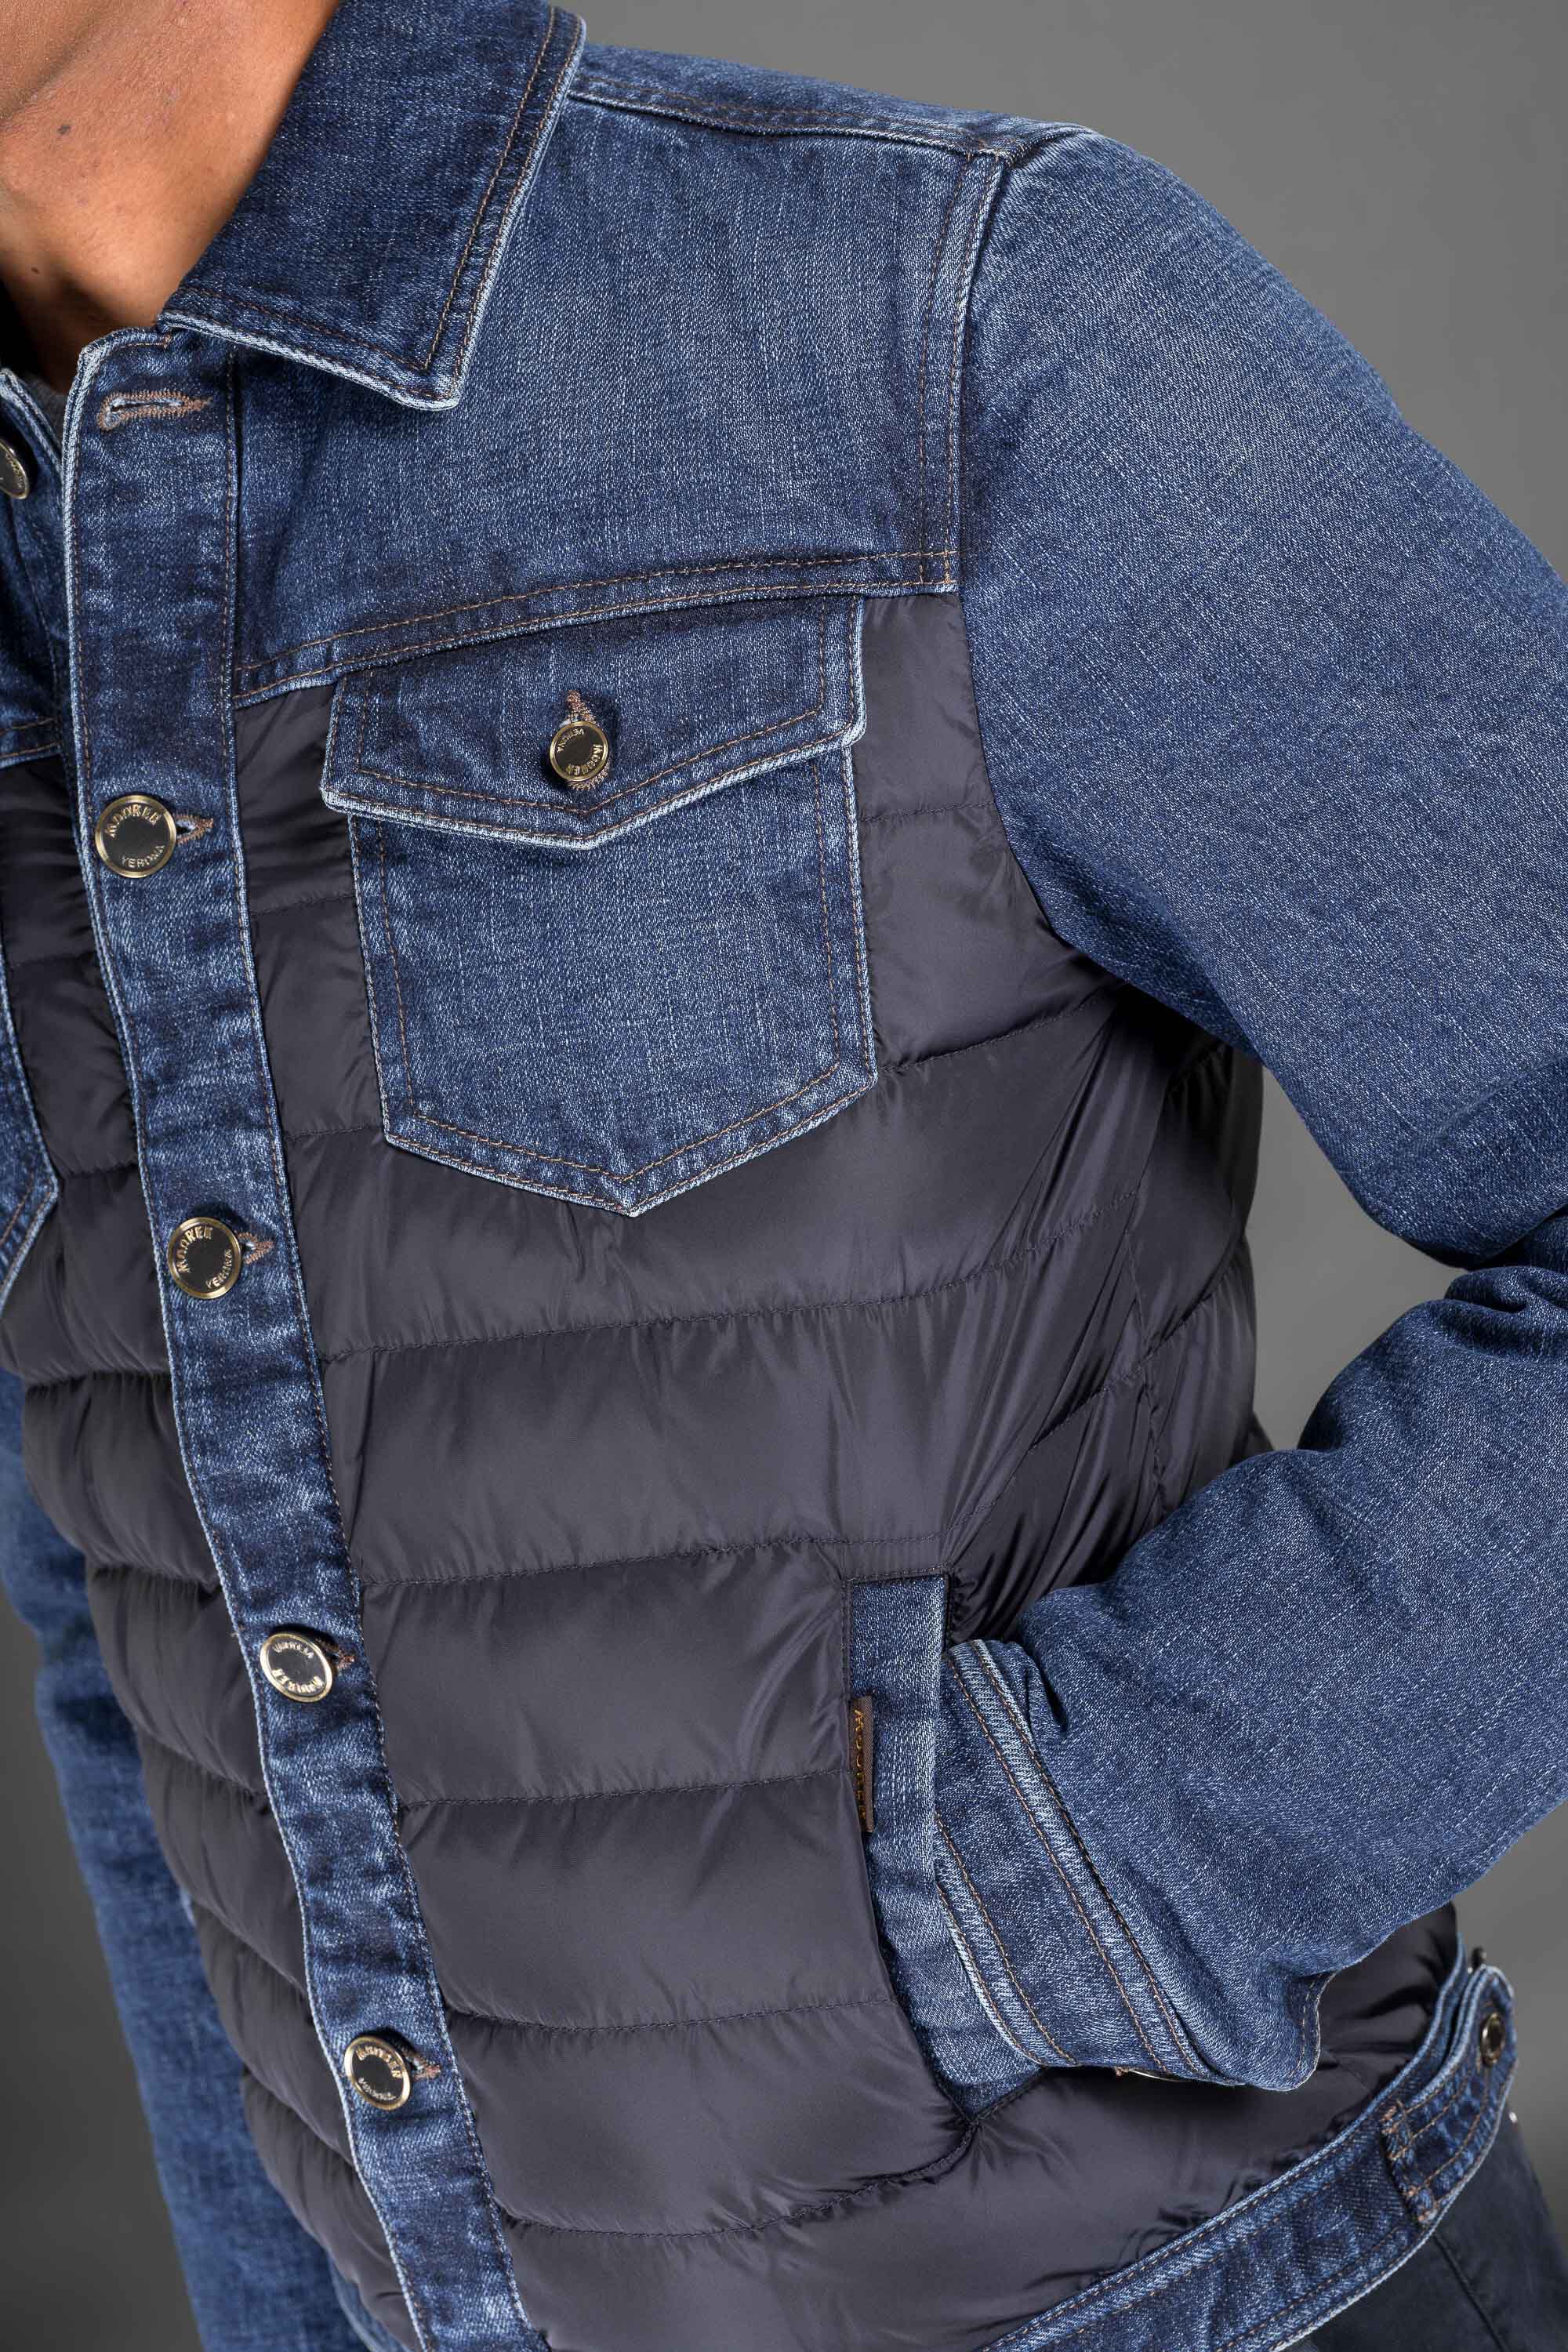 MONDOR-104S in BLU: Luxury Italian Jackets for Men | MooRER®